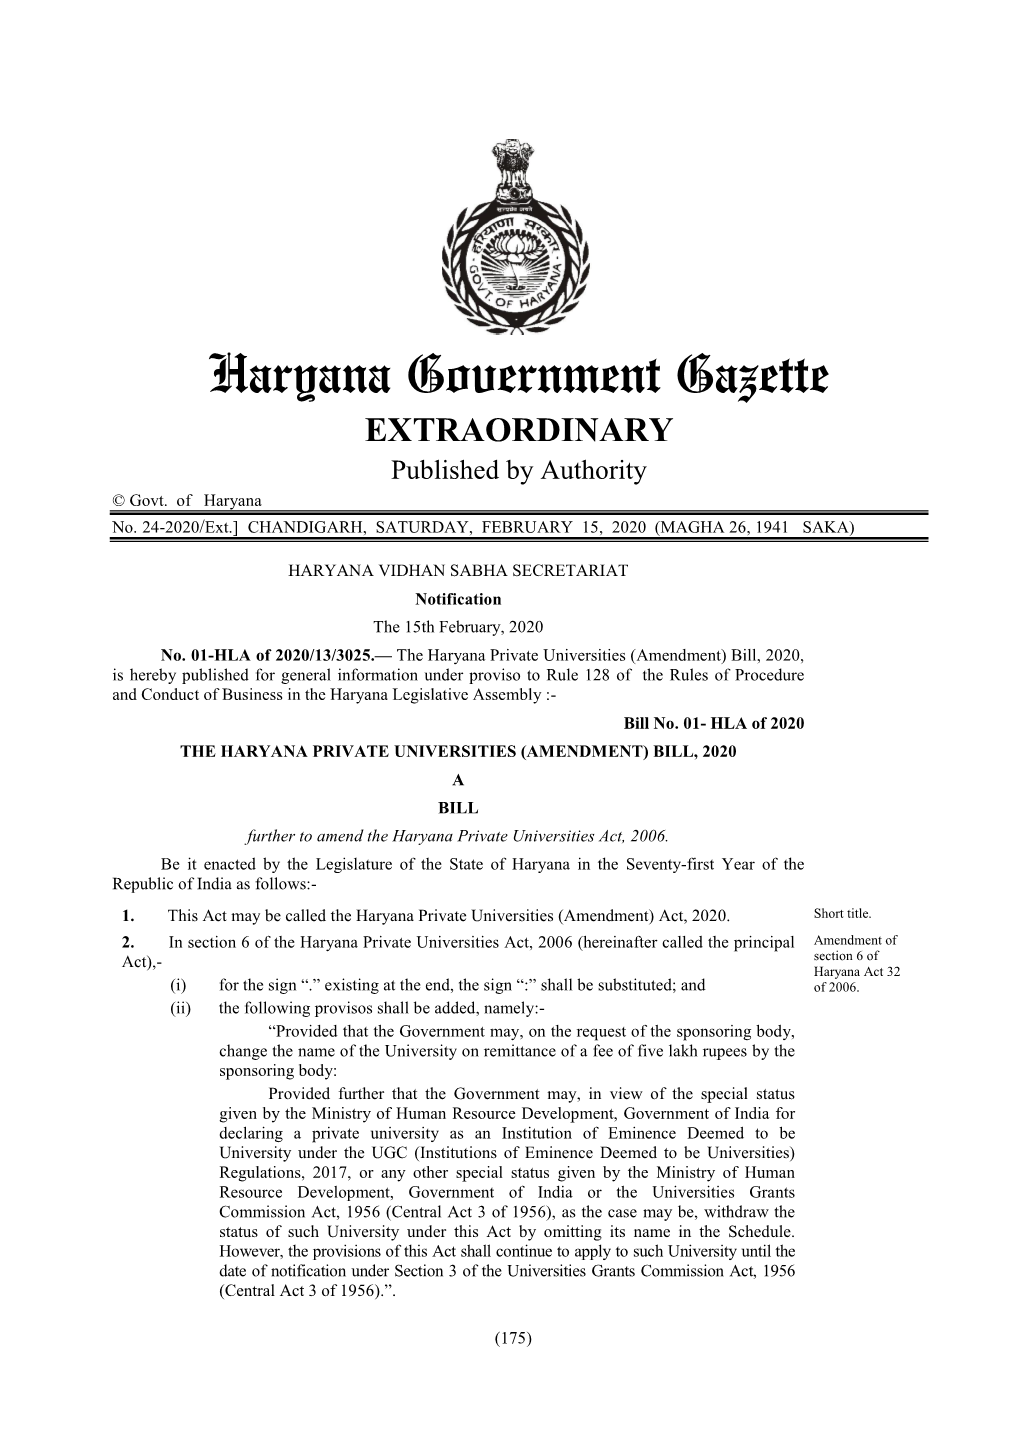 The Haryana Private Universities (Amendment) Bill, 2020